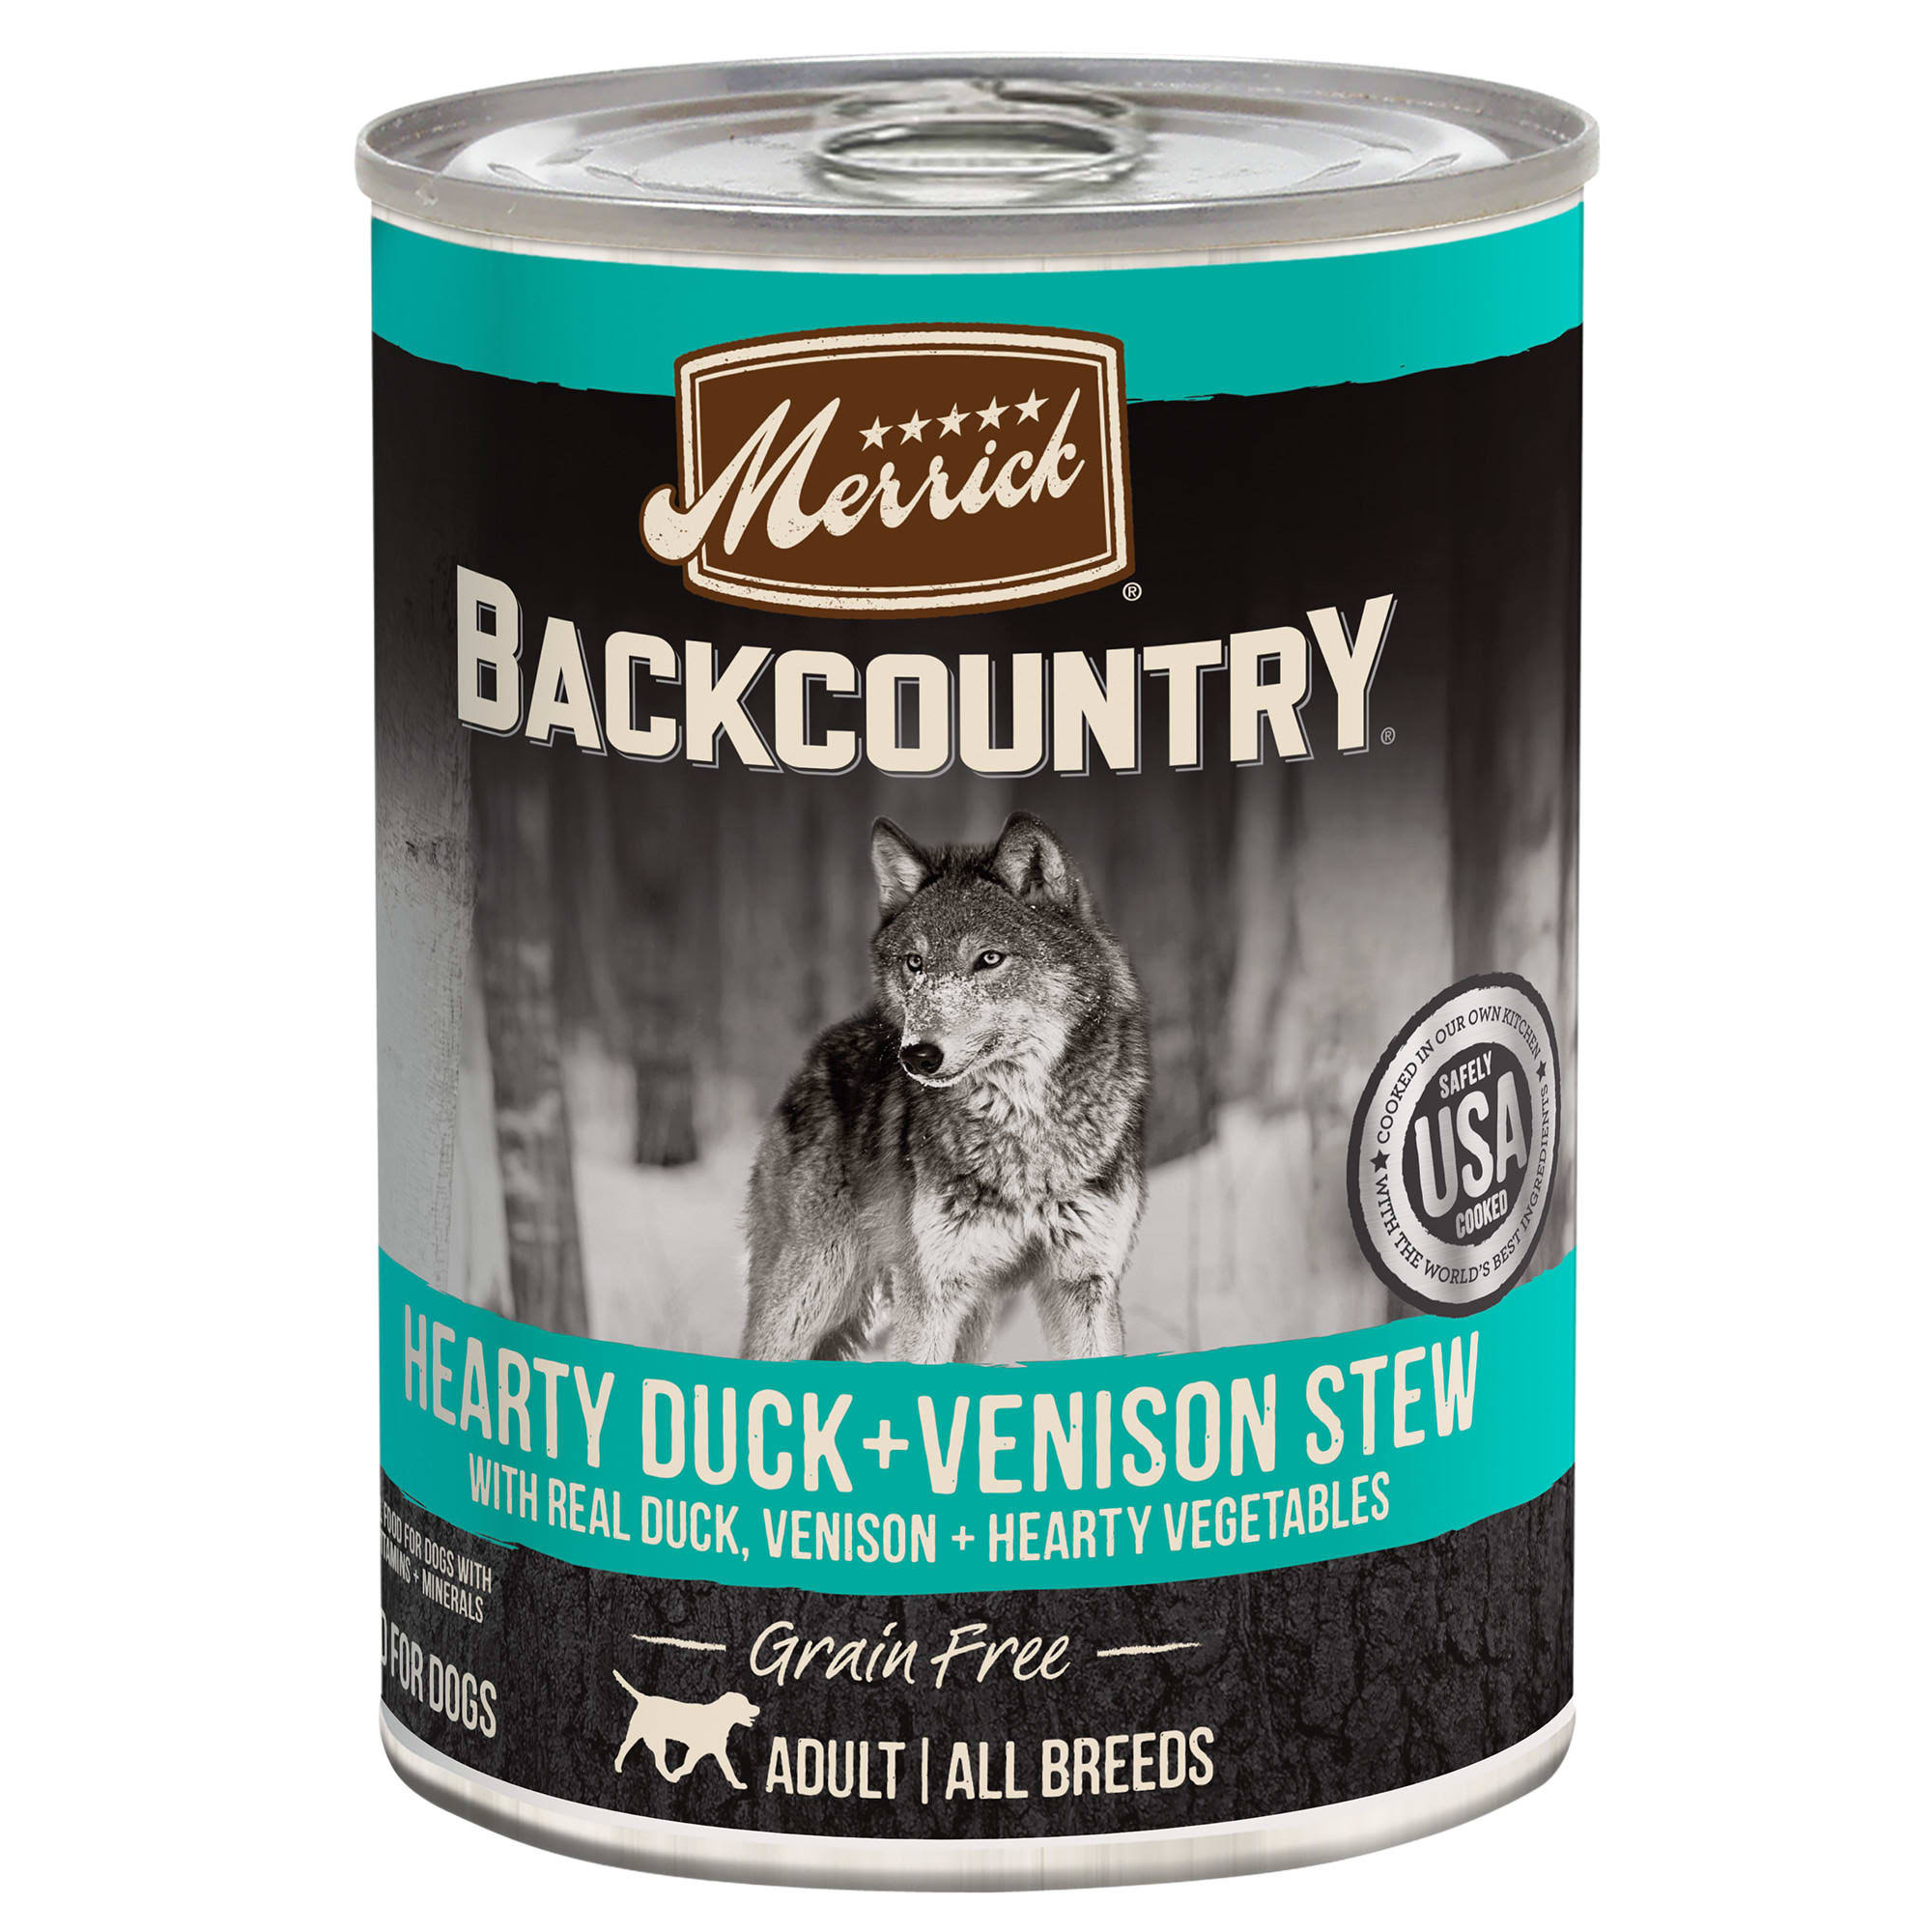 Merrick Backcountry Grain Free Dog Food - Hearty Duck & Venison Stew